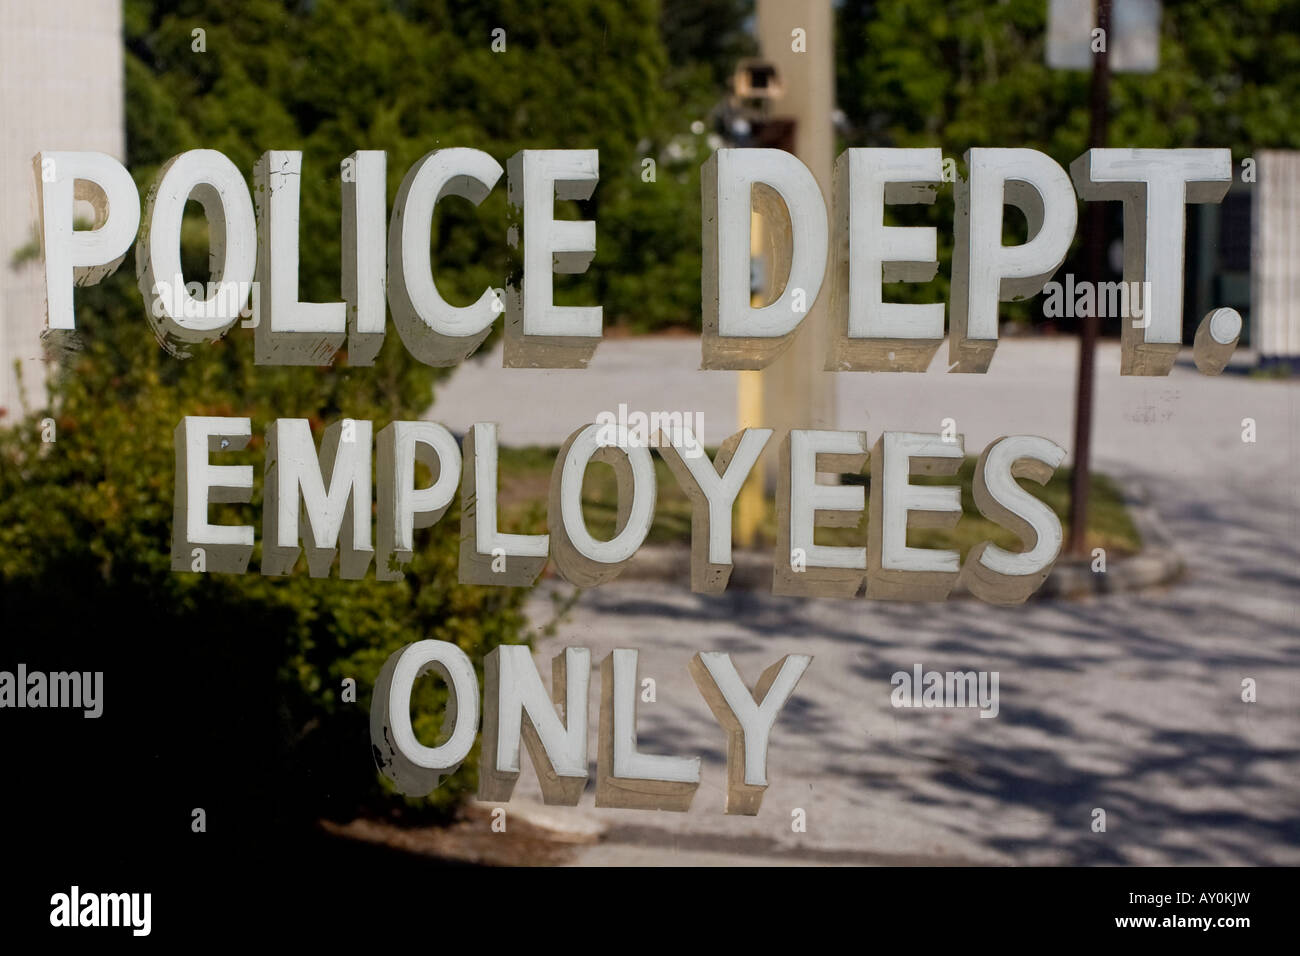 Police Department Employee Entrance Stock Photo